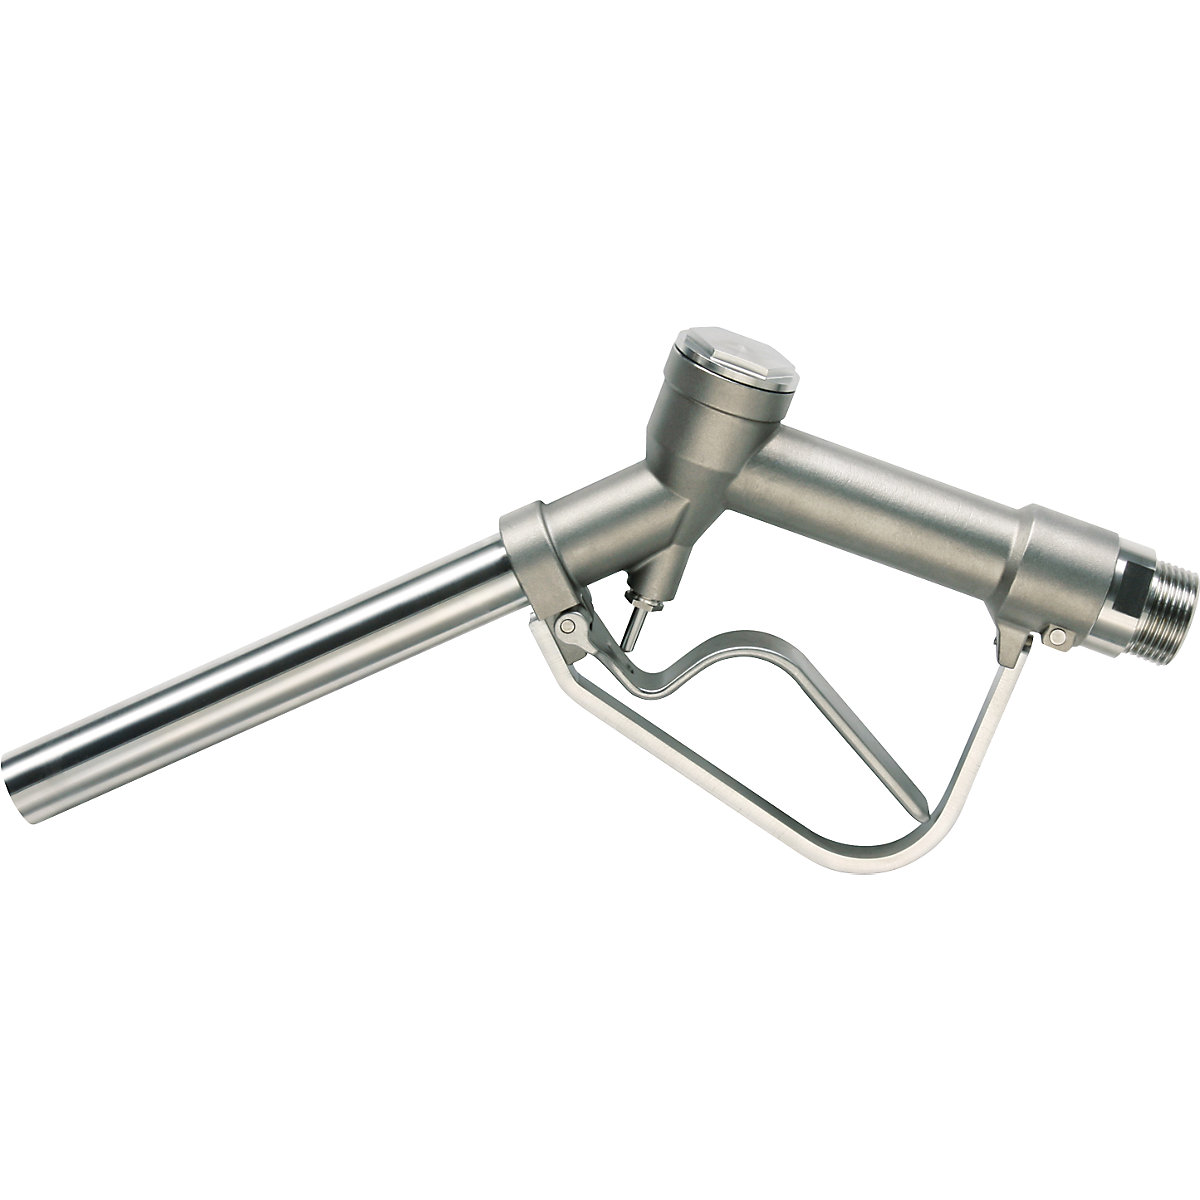 Pistol de alimentare manual din inox 1.4571 – Jessberger